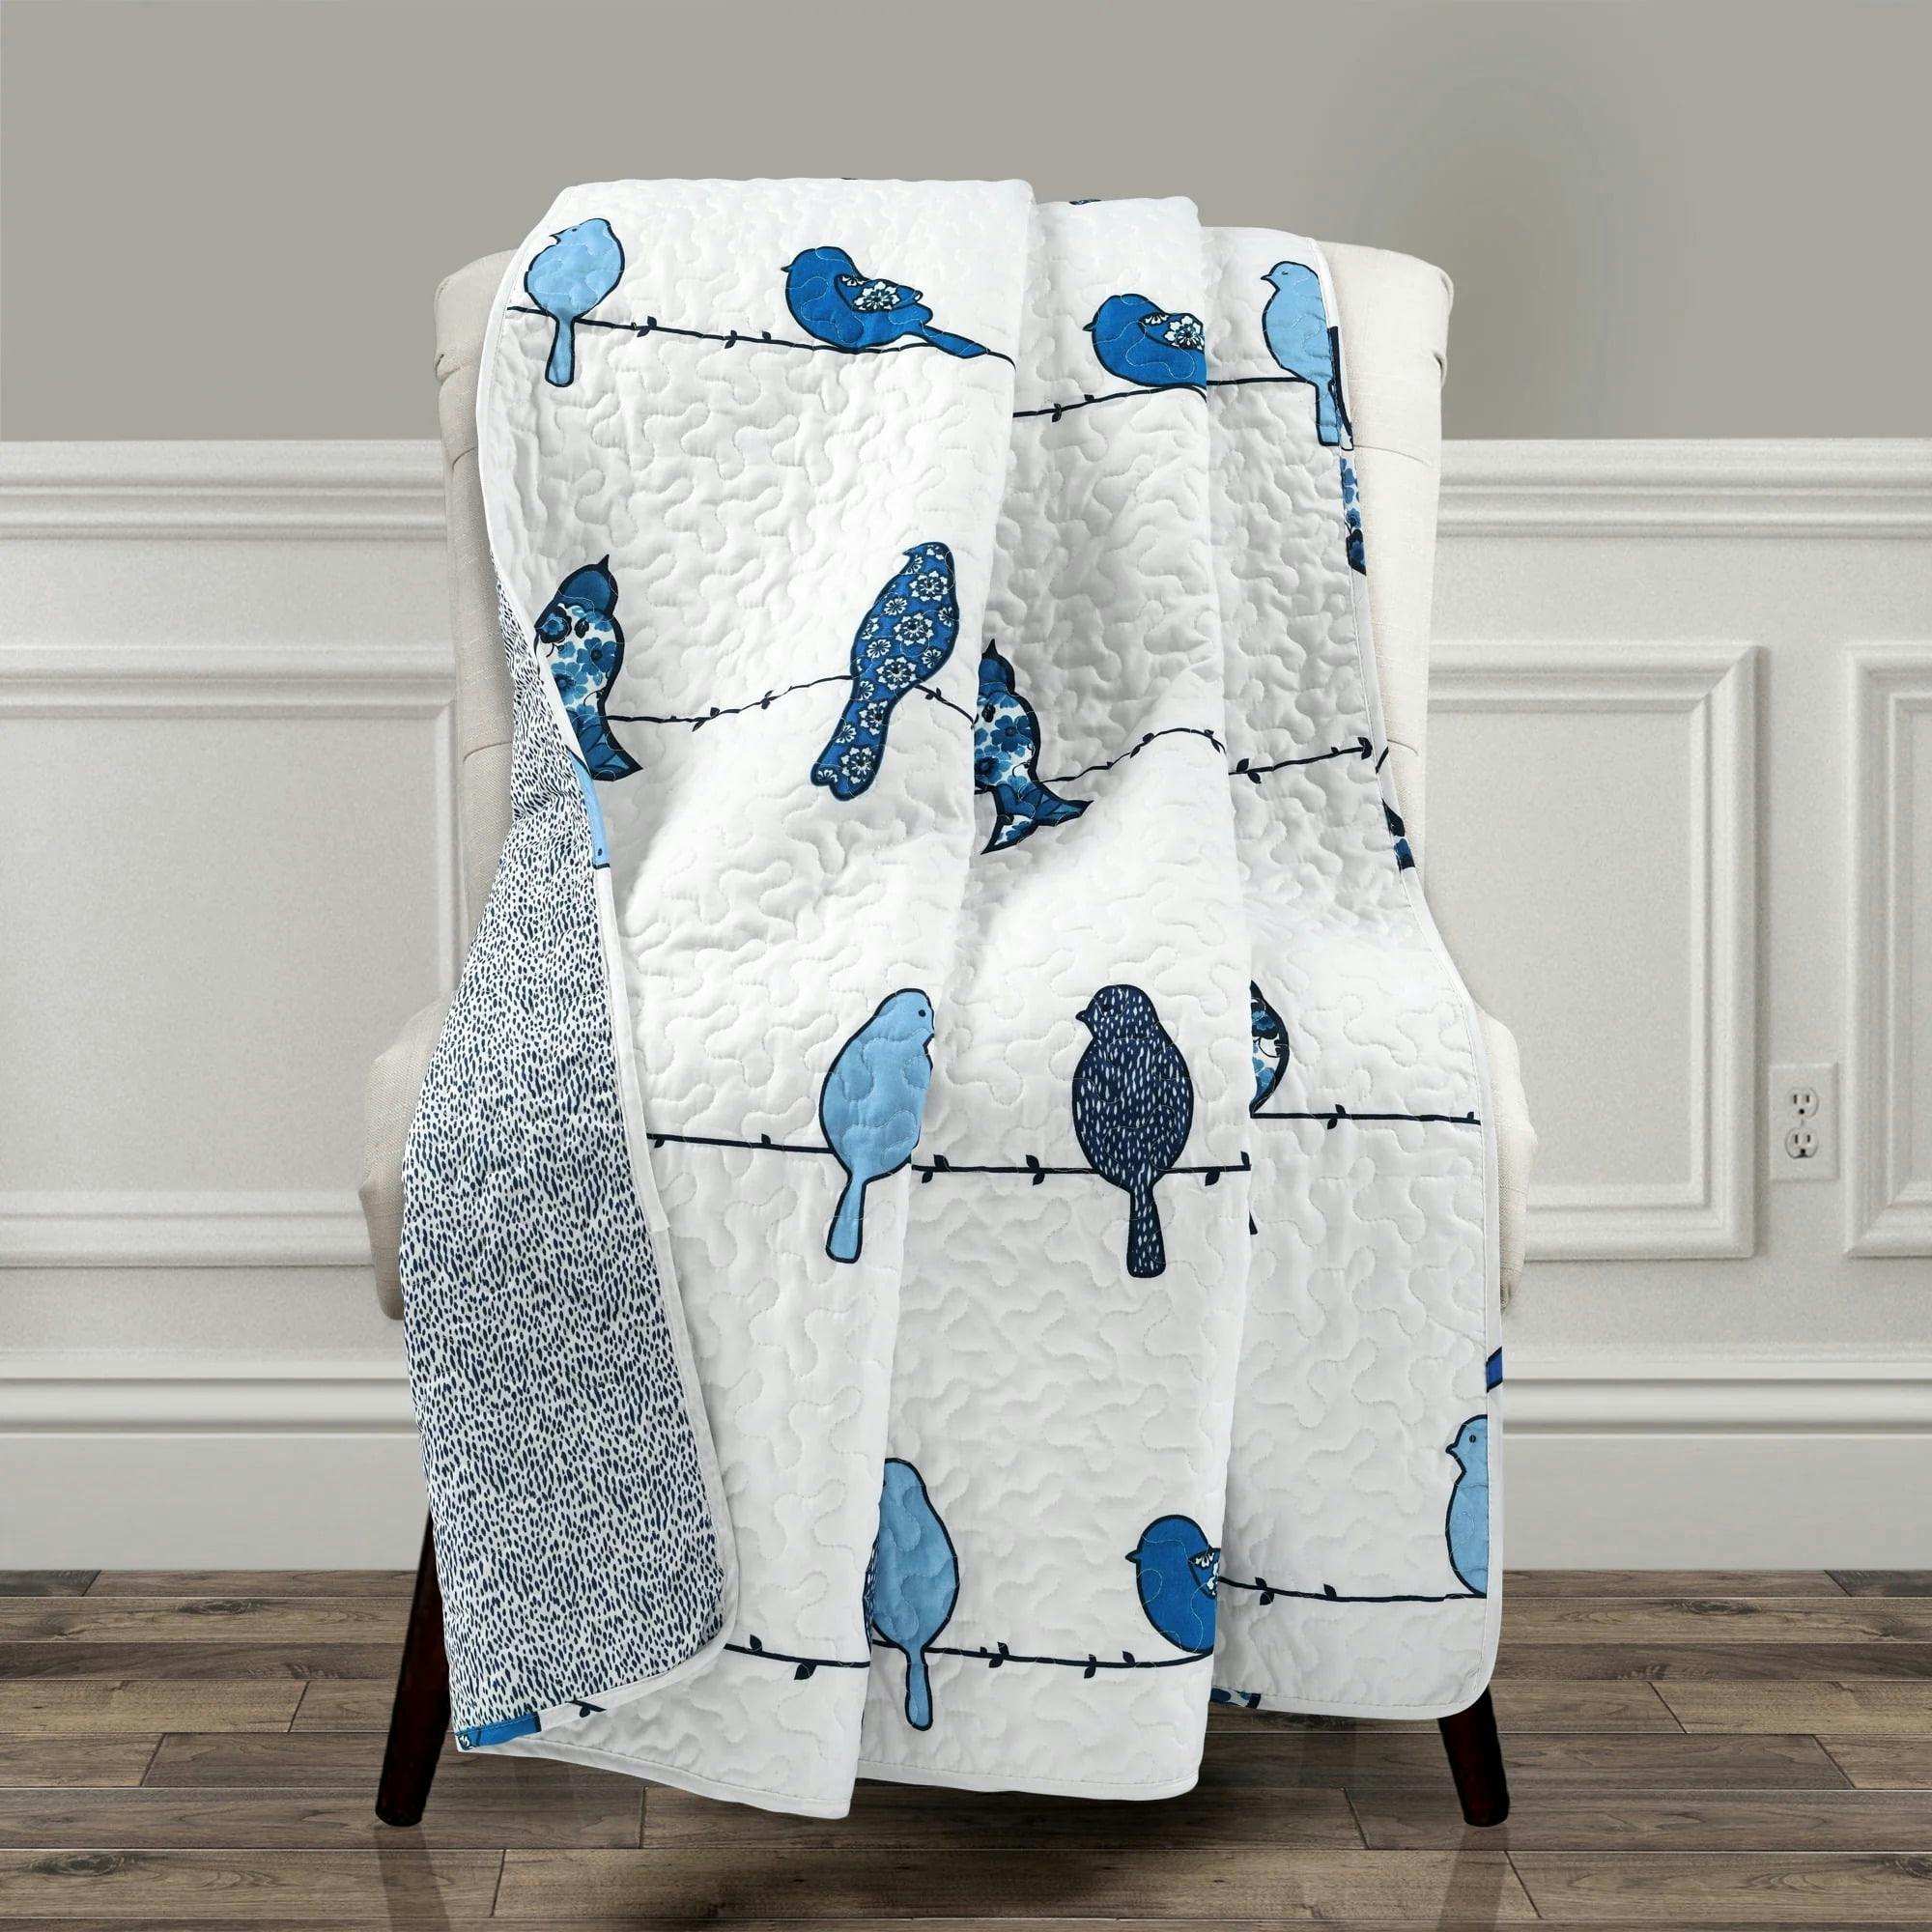 Modern Reversible Toddler Throw Blanket with Birds Theme, 60" x 50", Navy